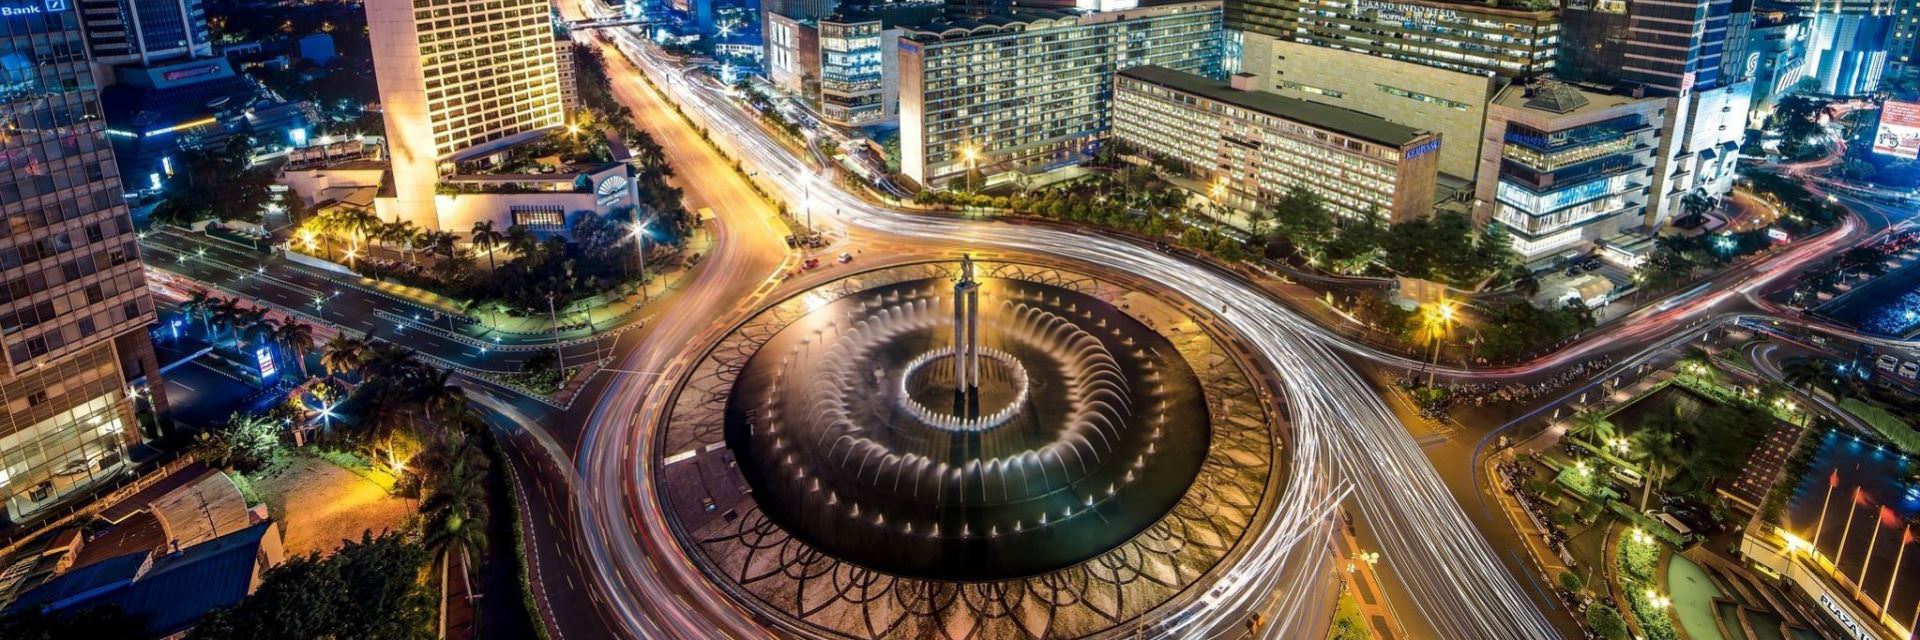 15 Spot Instagram Terbaik di Jakarta yang Akan Menjadikan 